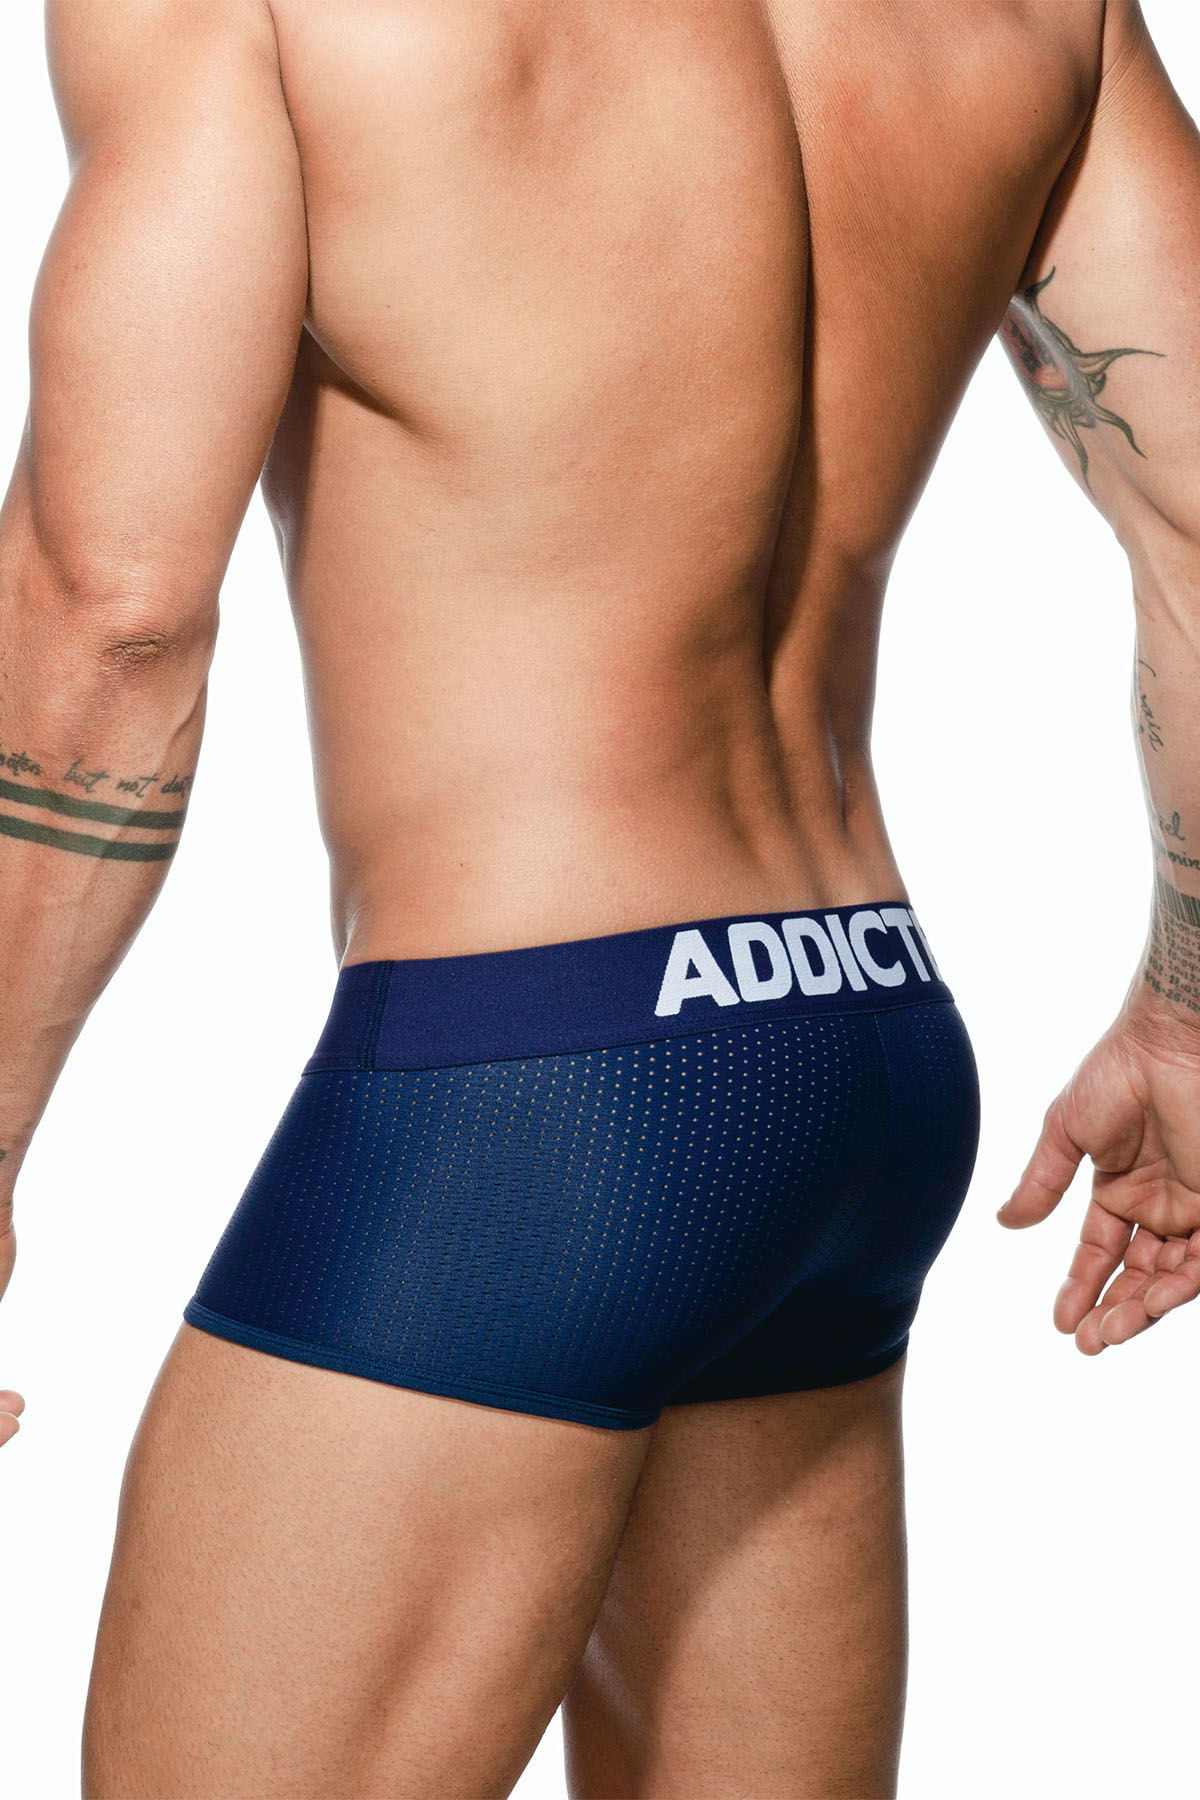 STRIPPED BOXERS - Adam Men's Undergarments - Mobicity®